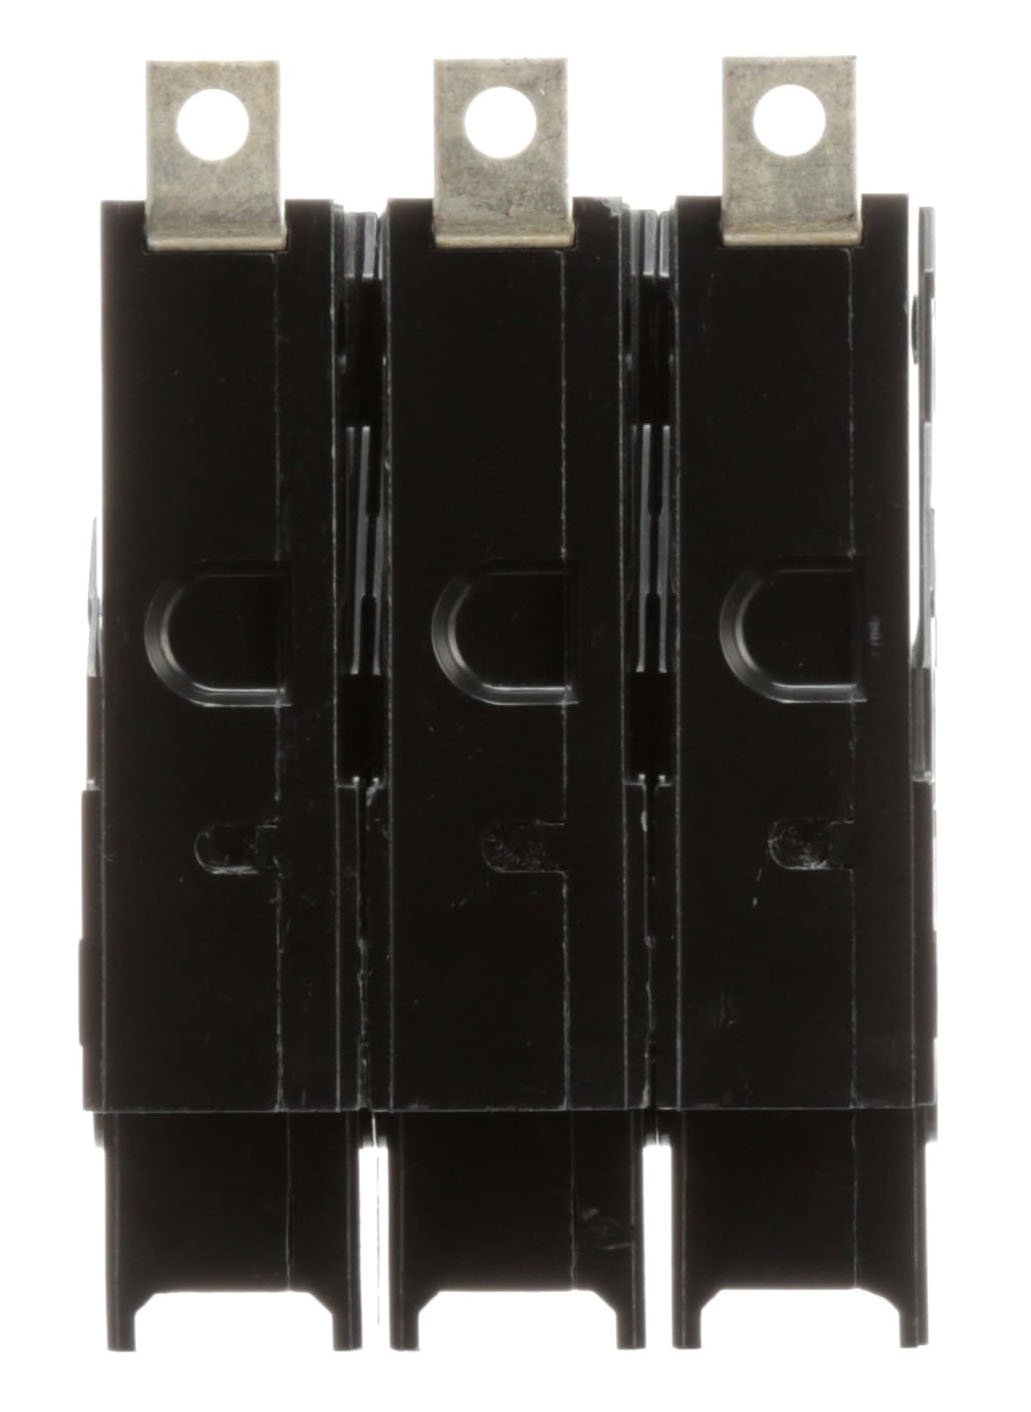 BQD6330 - Siemens - 30 Amp Molded Case Circuit Breaker